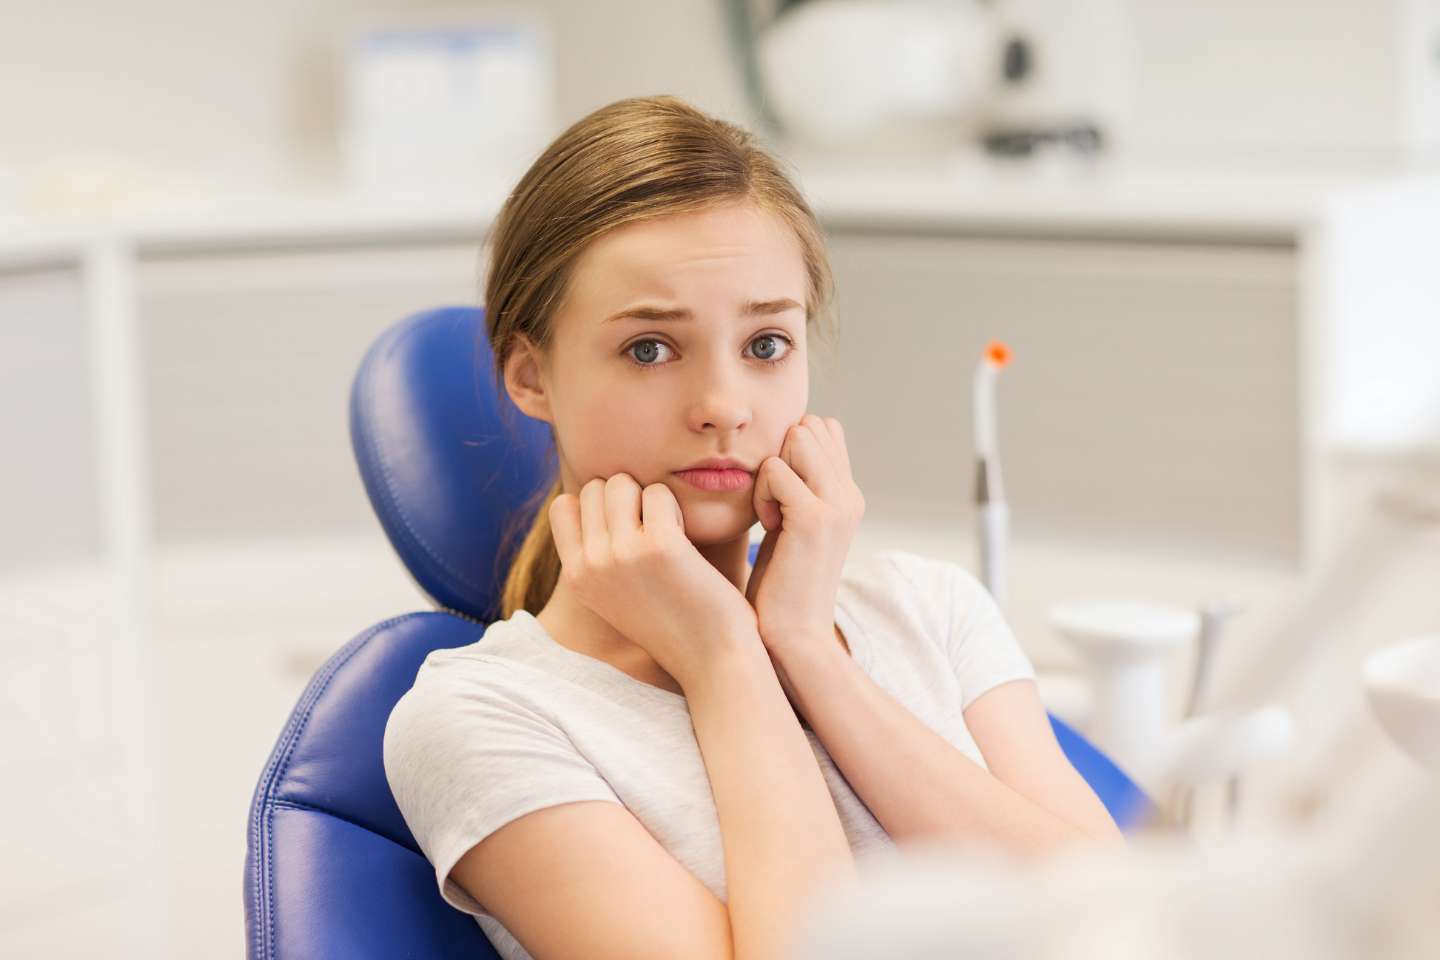 Girl Having Dental Anxiety